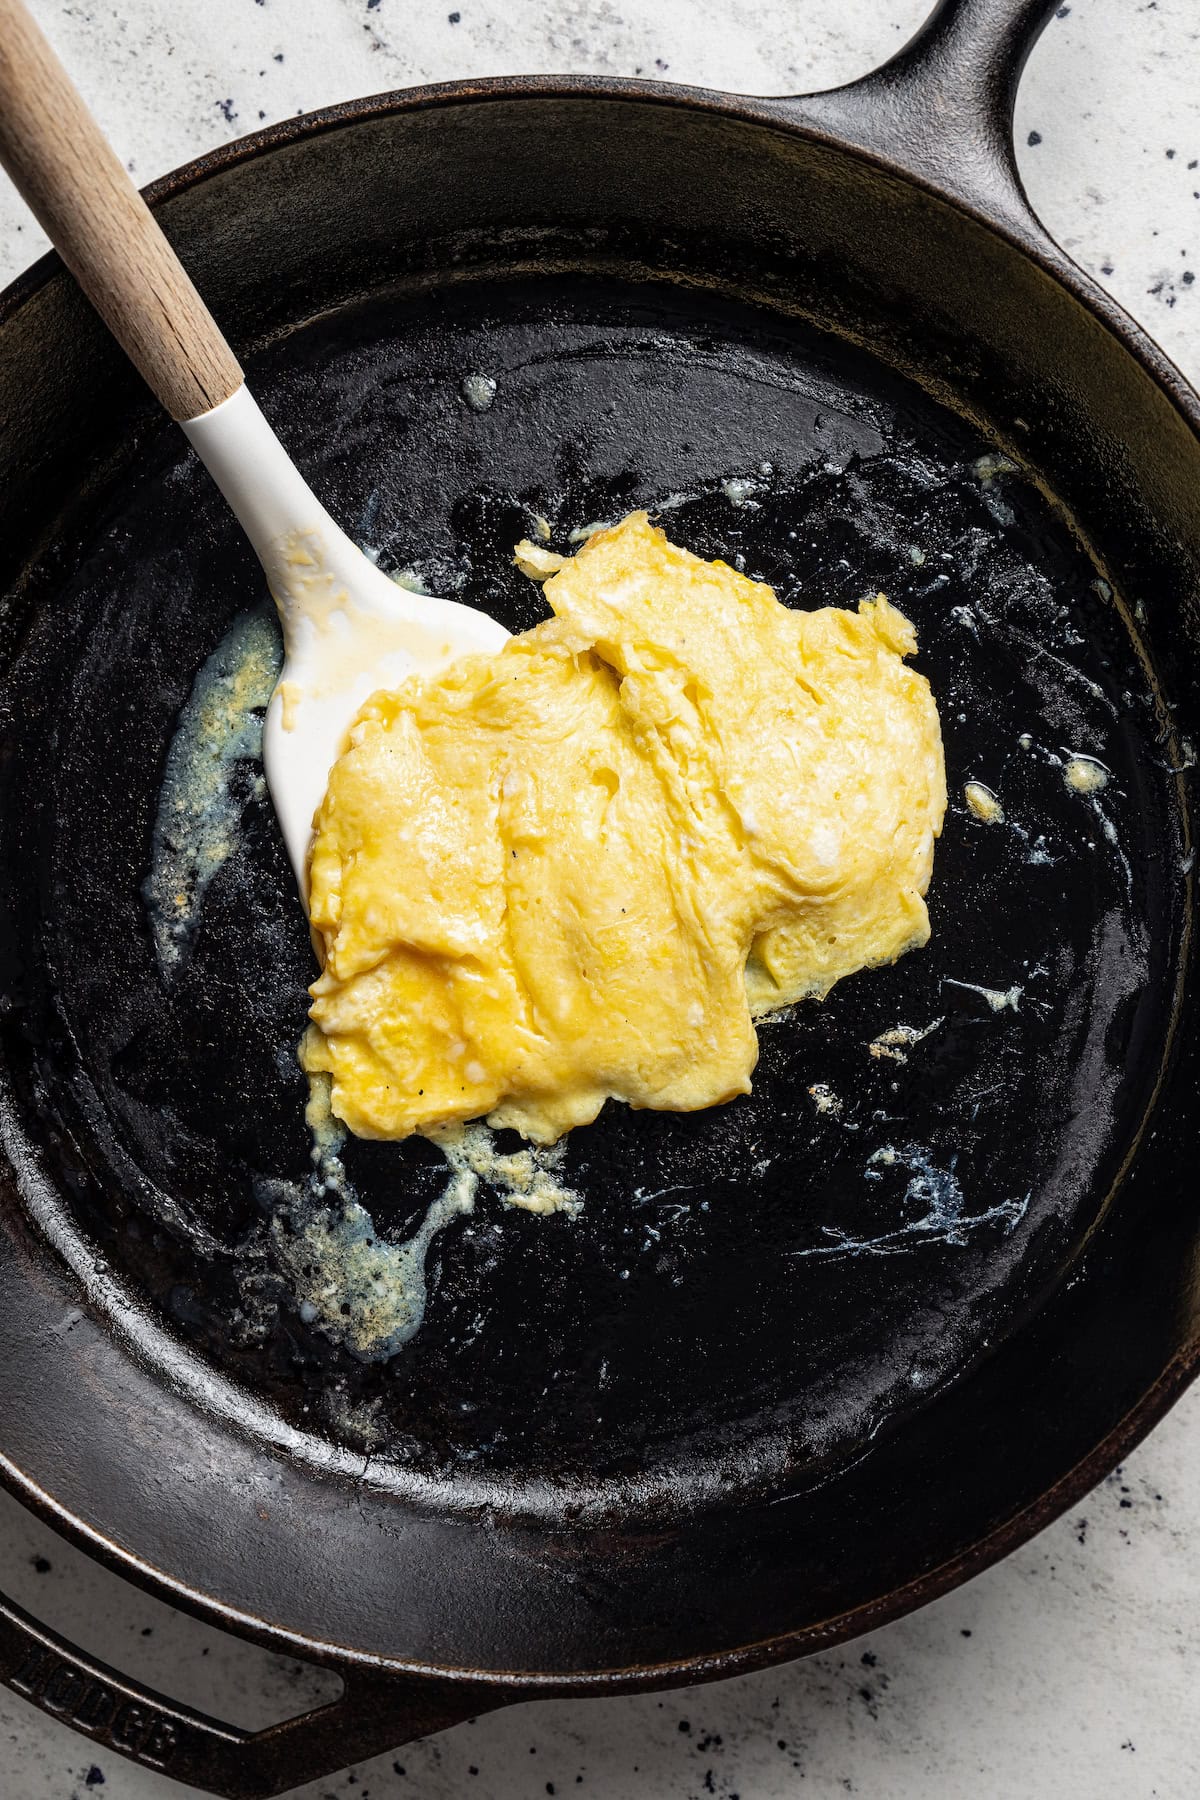 A scrambled egg in a skillet with a spatula.